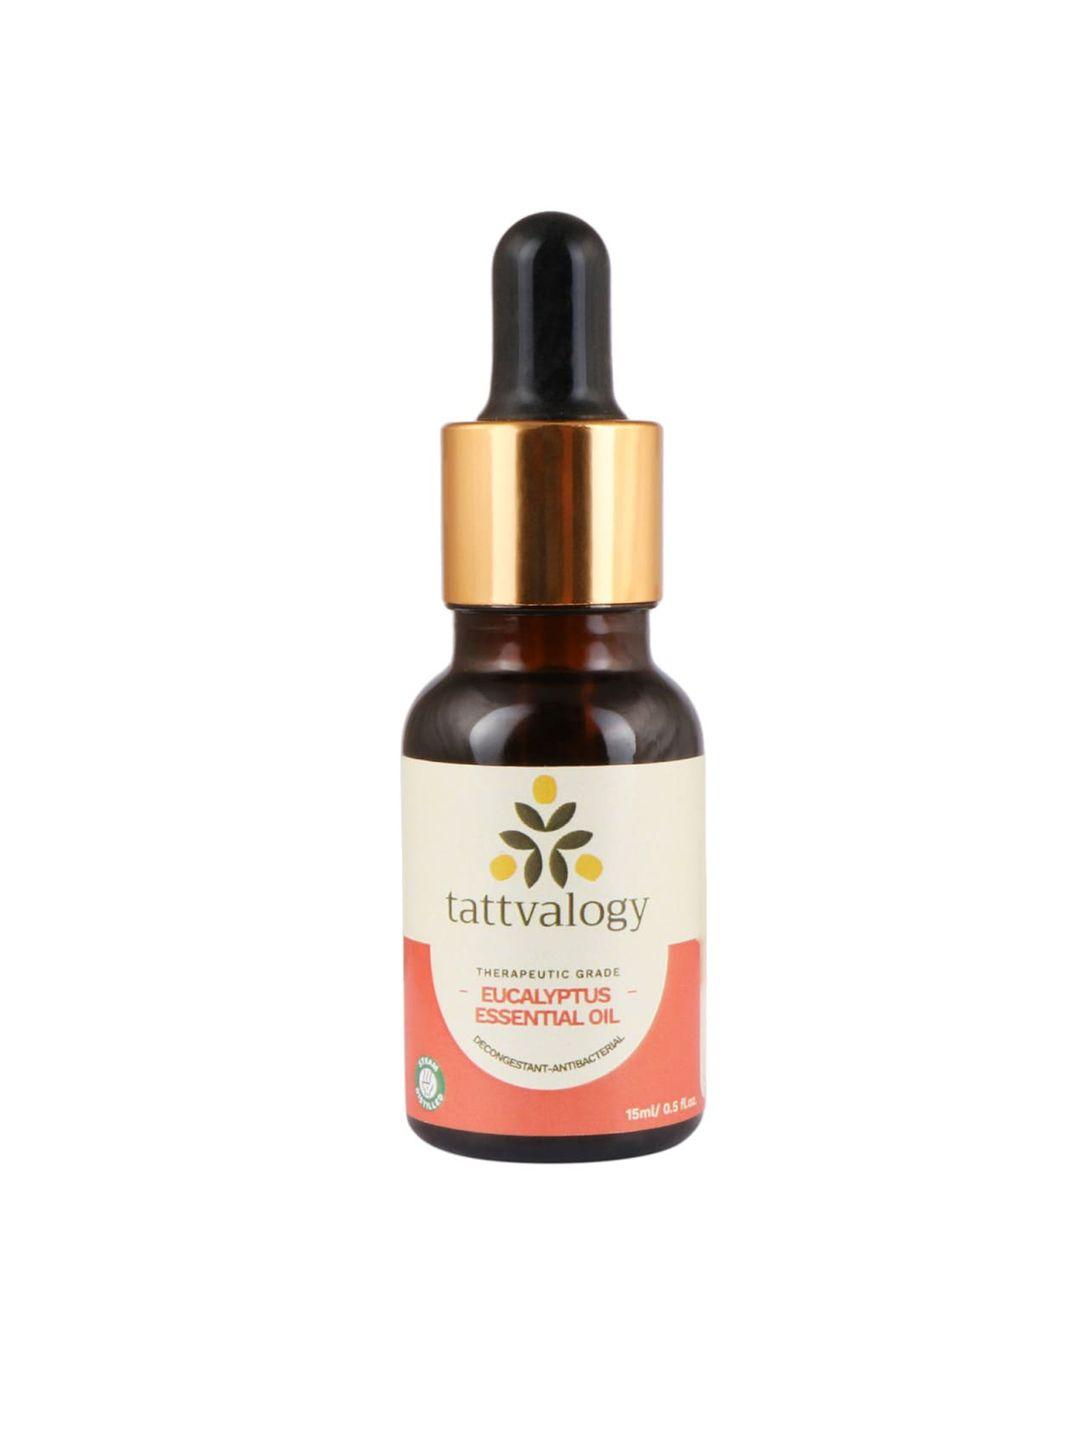 tattvalogy therapeutic grade eucalyptus essential oil - 15 ml